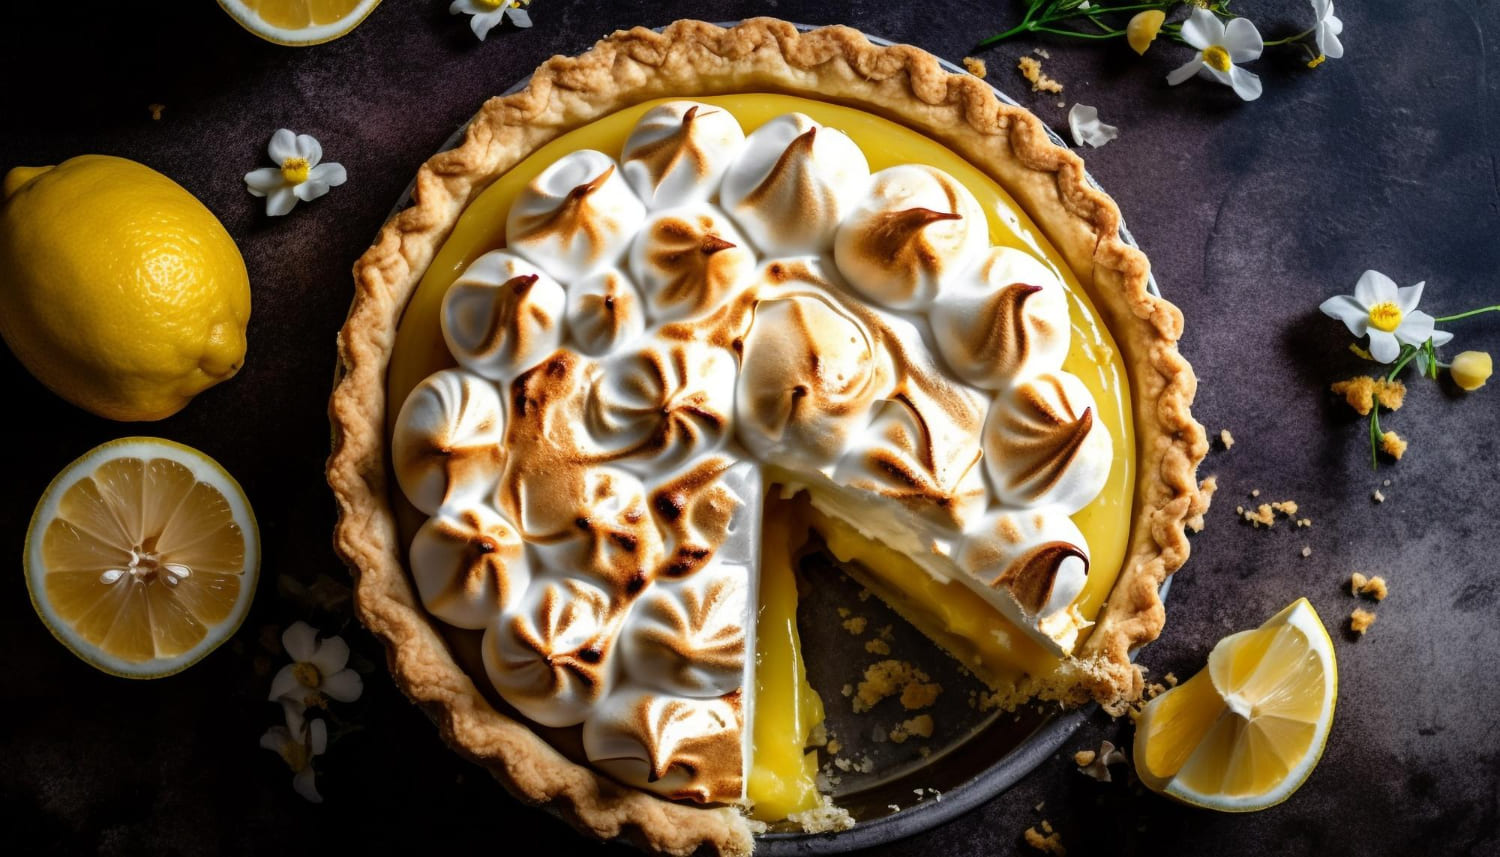 How to make lemon pie